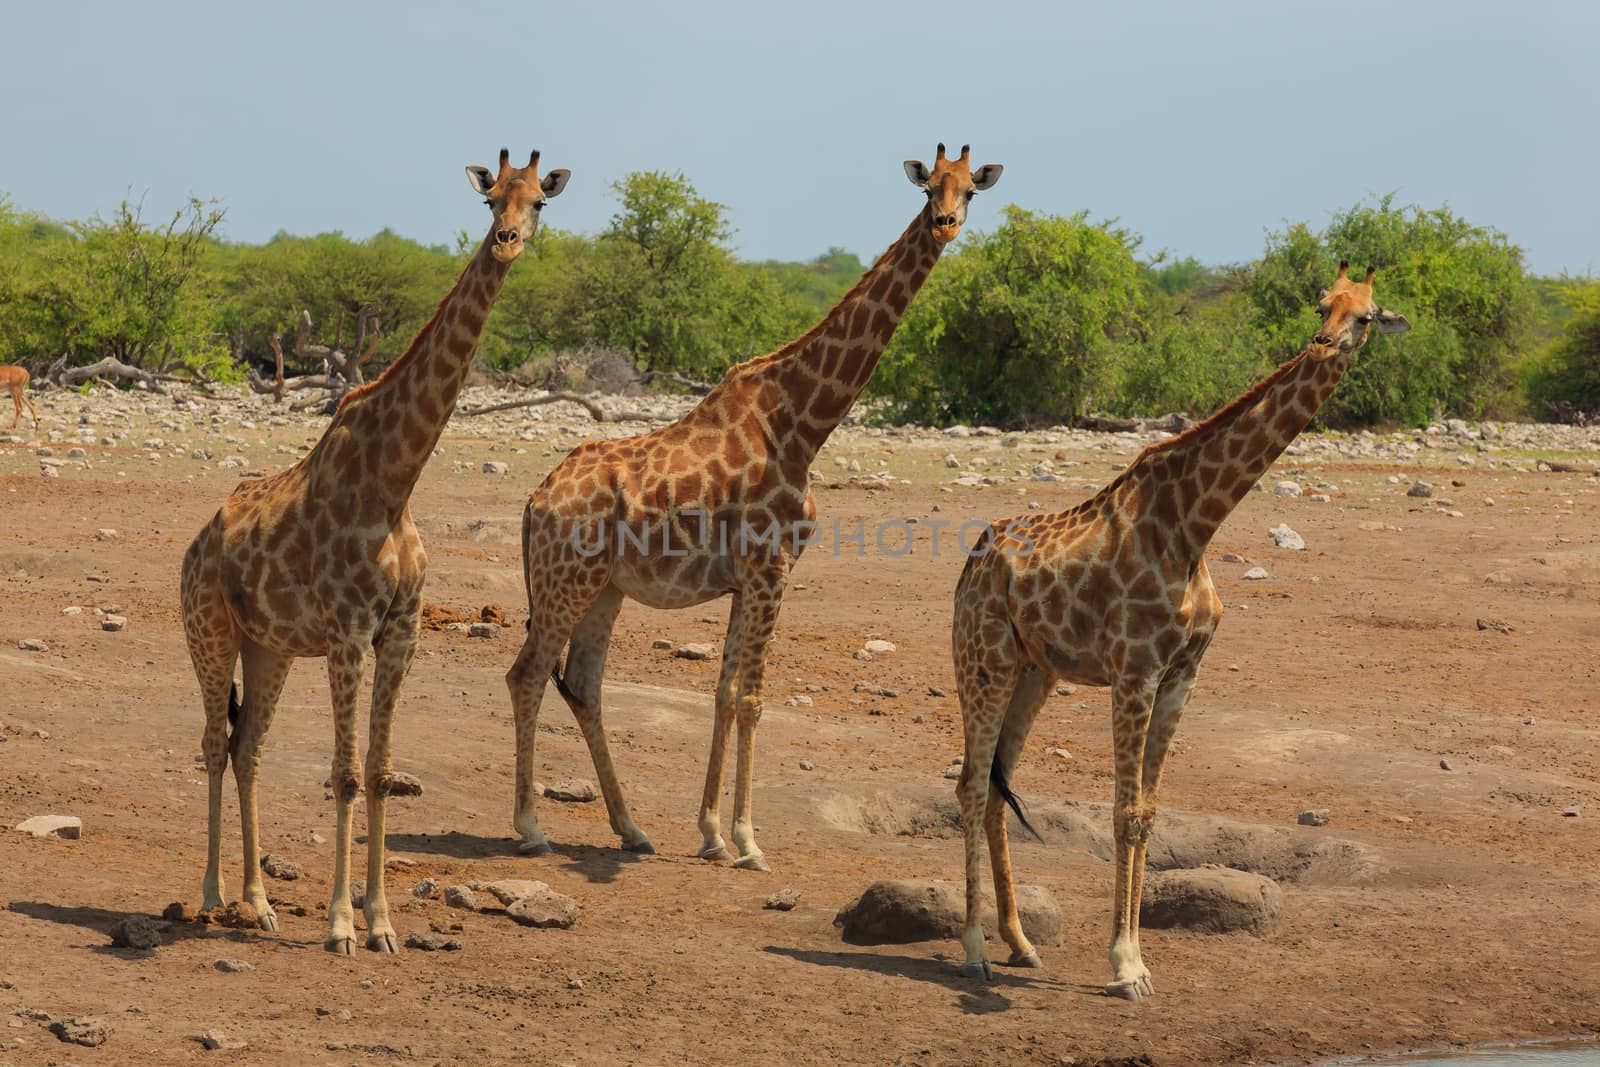 Herd of giraffes from Etosha National Park, Namibia